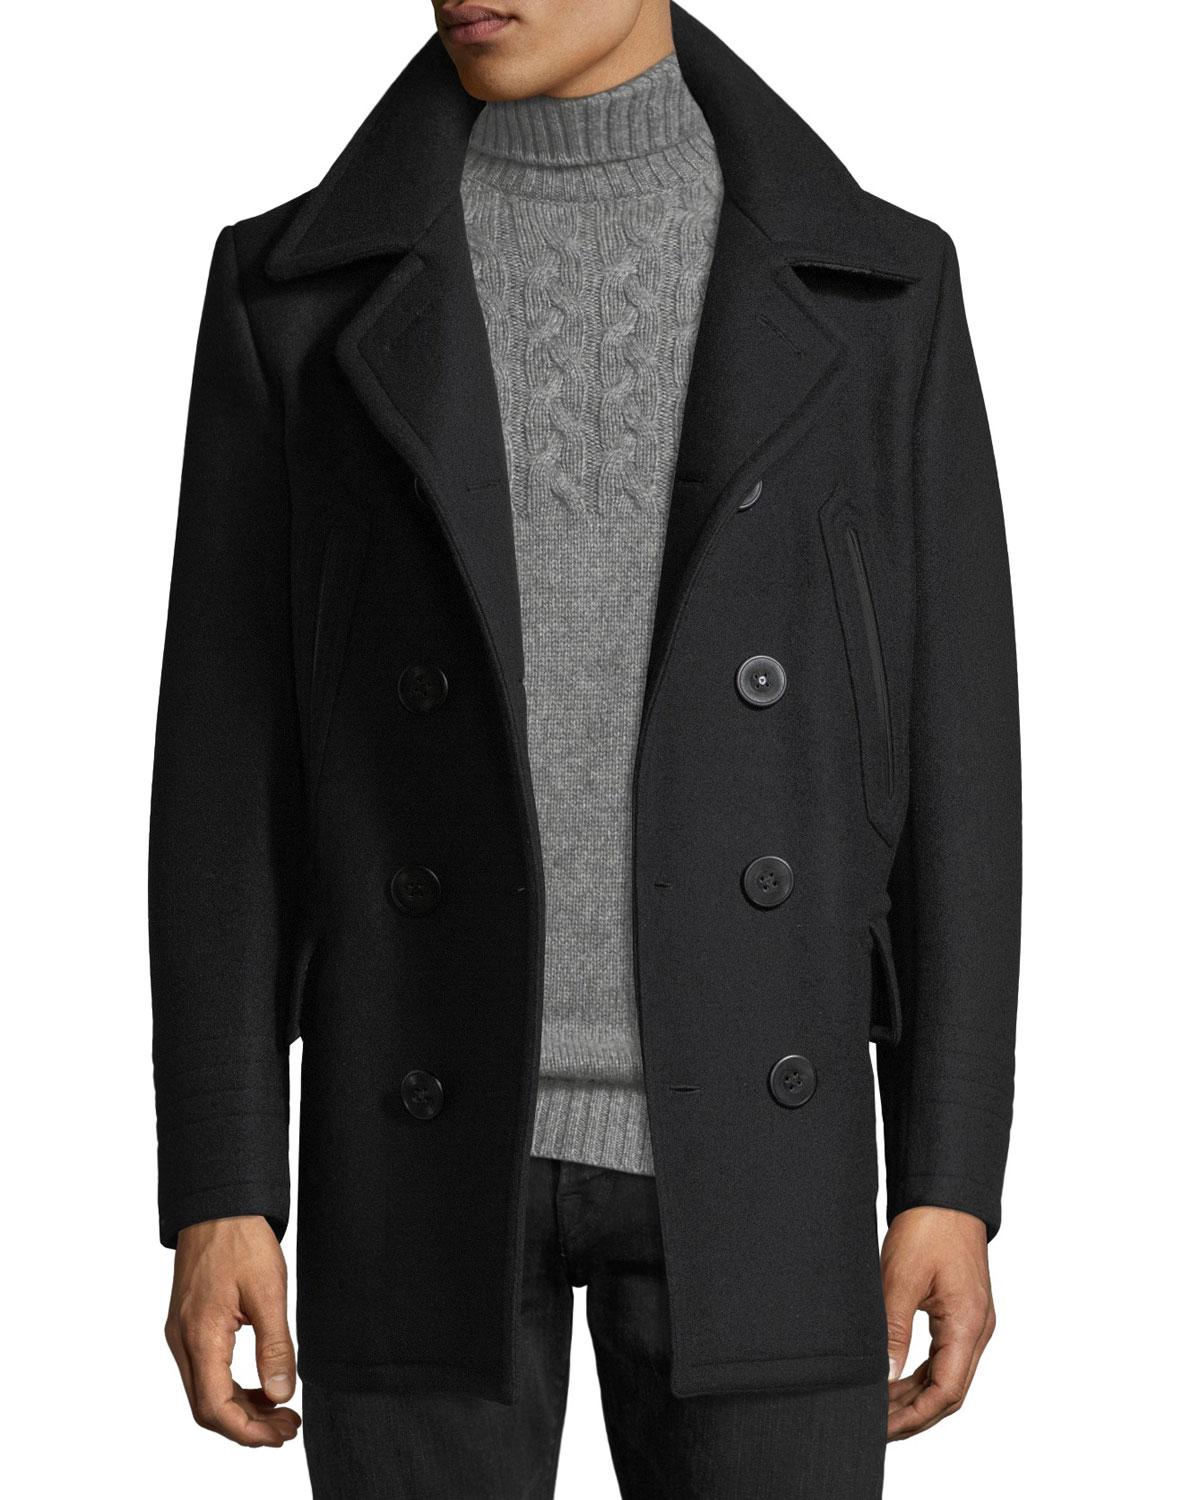 Tom Ford Wool-blend Pea Coat in Black for Men - Lyst